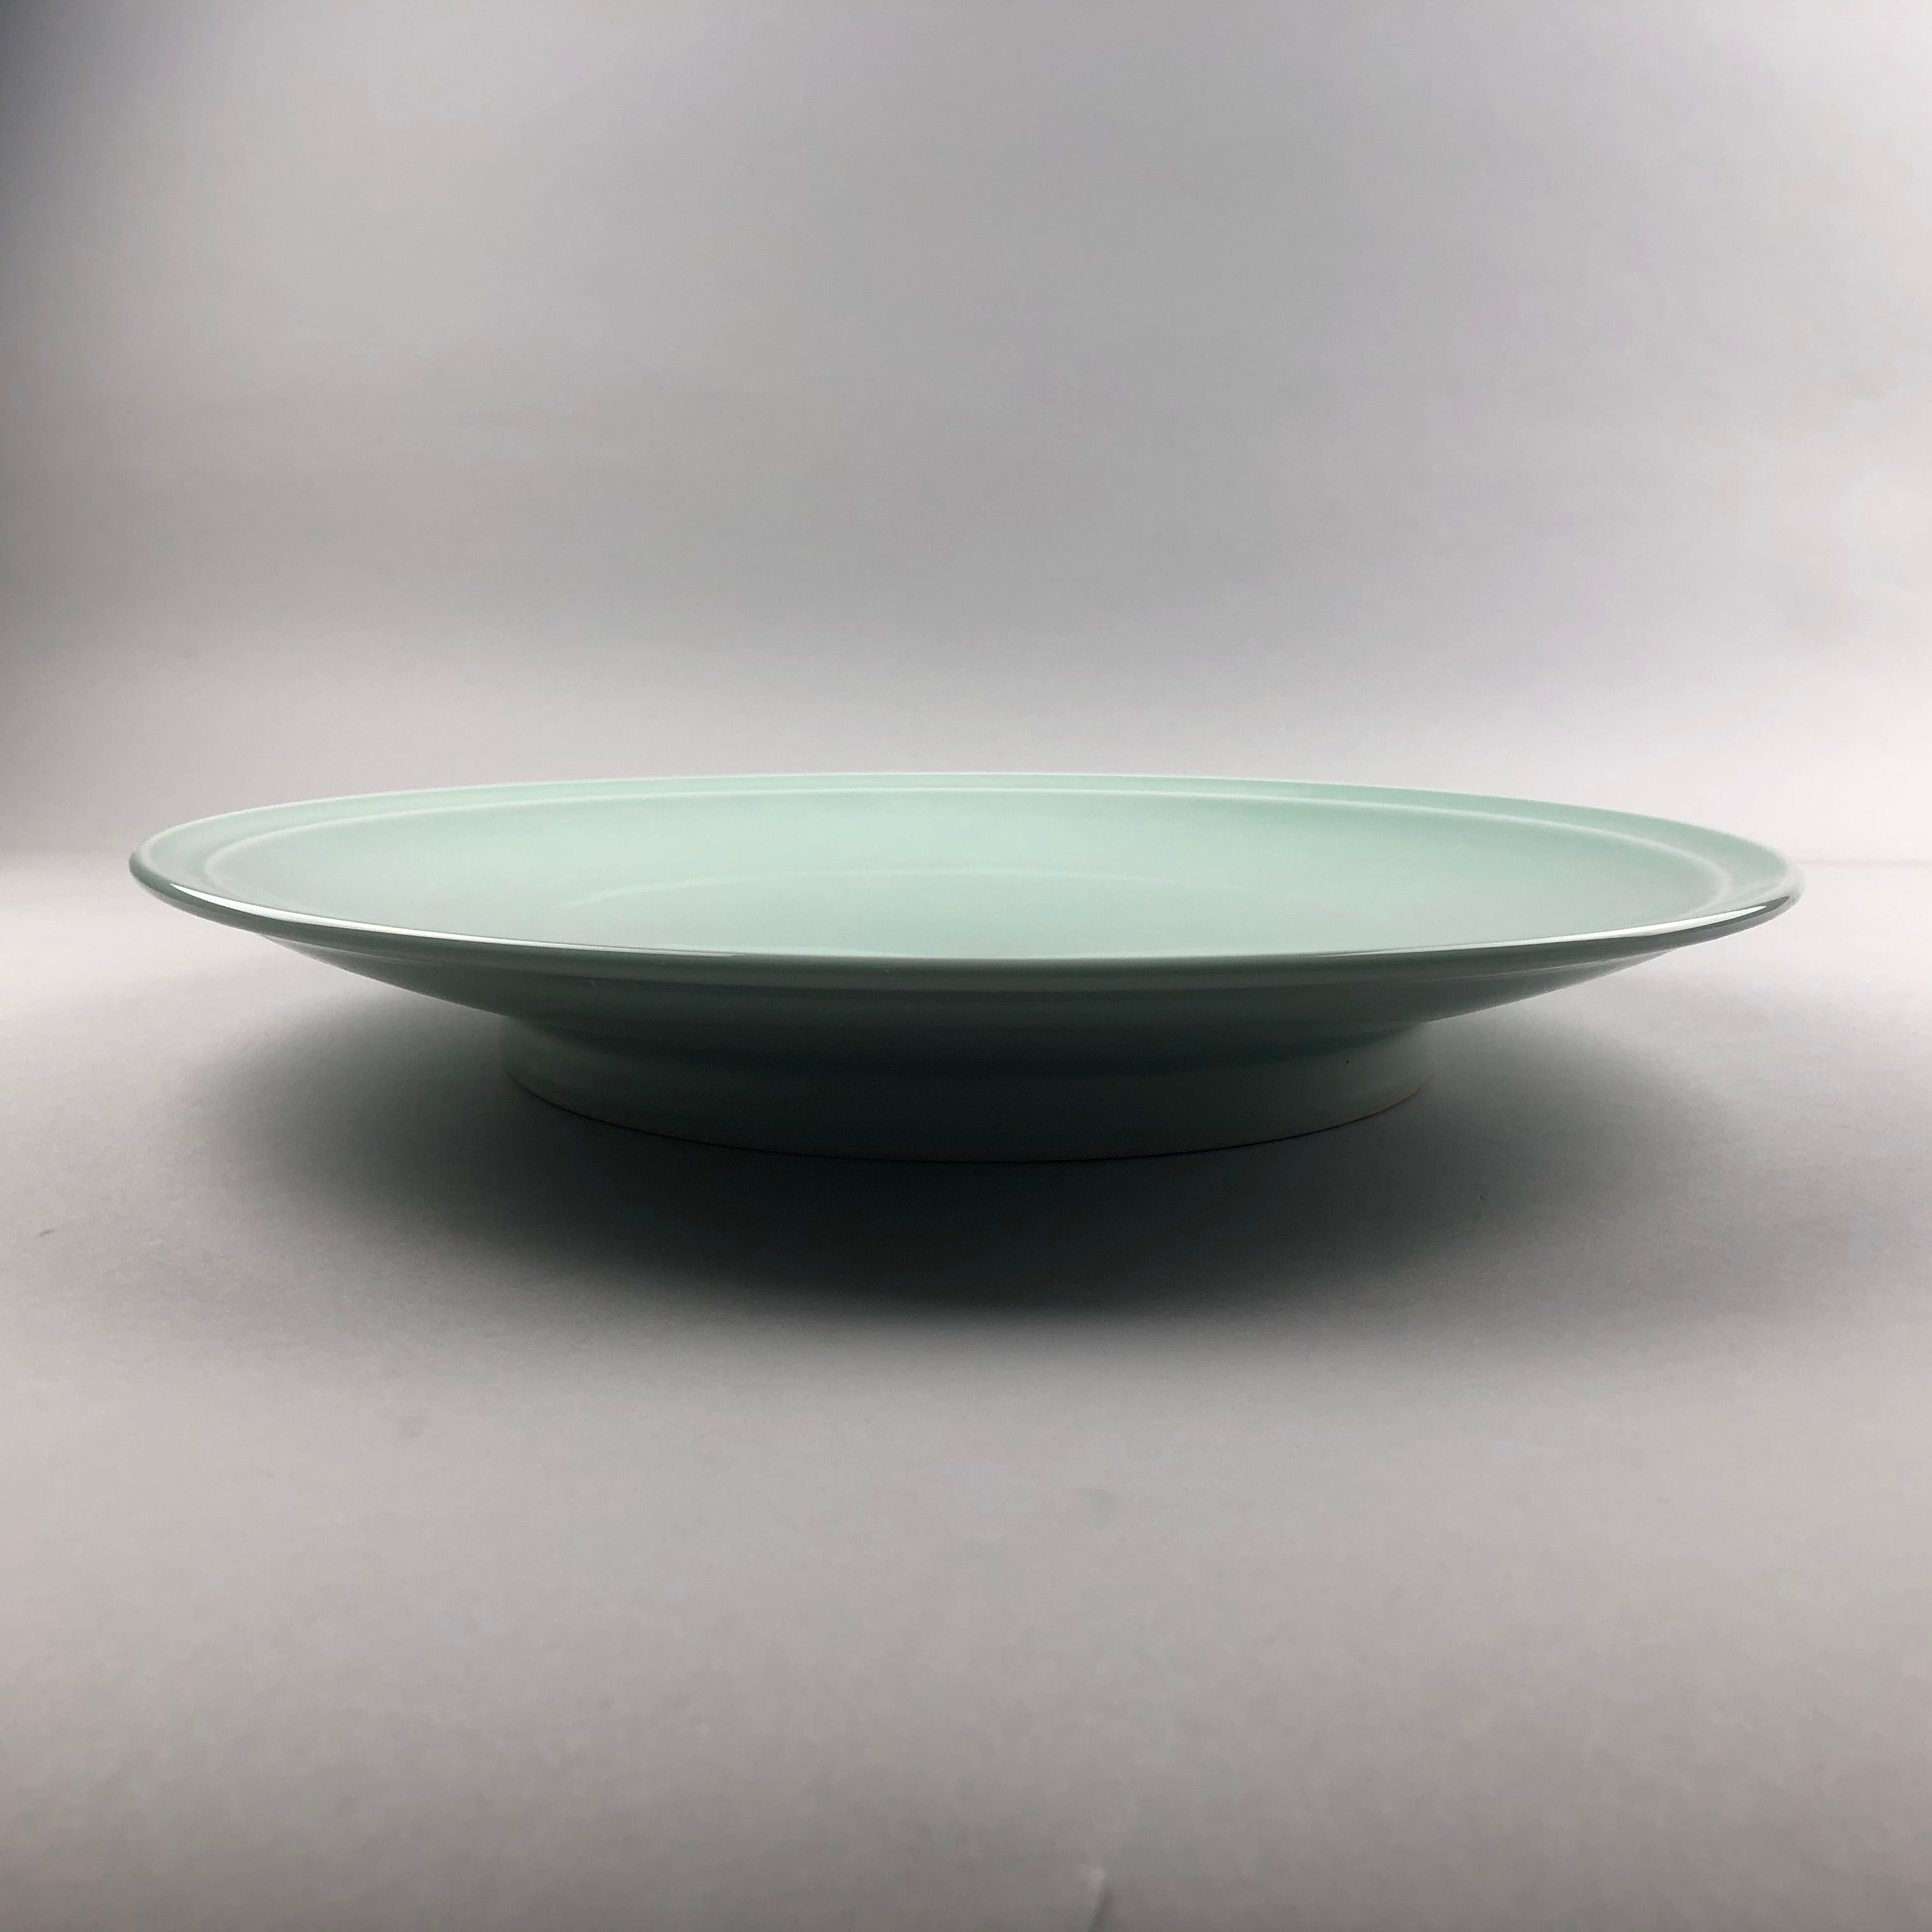 Restaurant Equipment 日本食 日式厨具 Discount 和食 Manhattan New York Japanese Colorful Ceramics 大皿 light green emerald Extra Large Plate